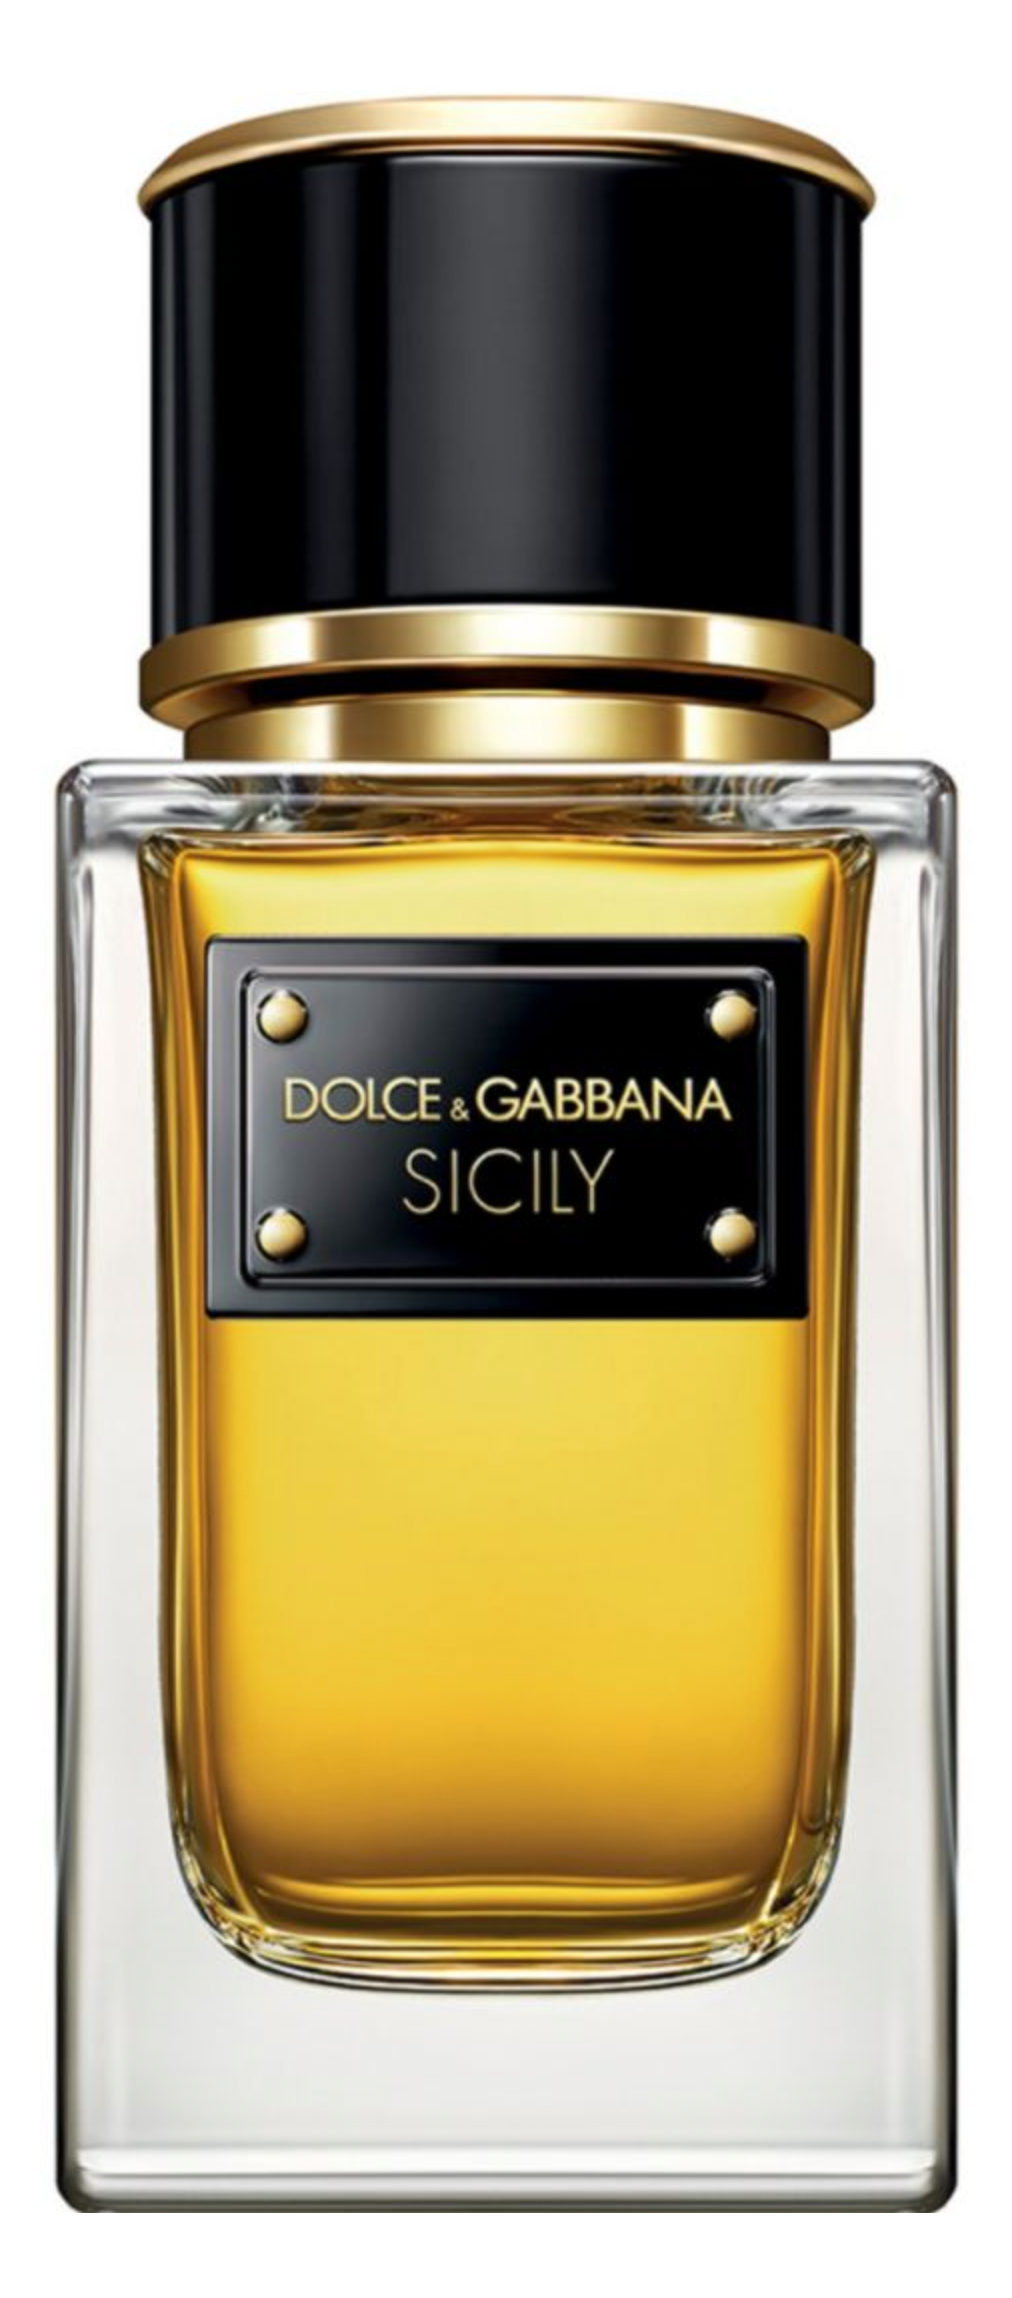 perfume similar to dolce and gabbana sicily